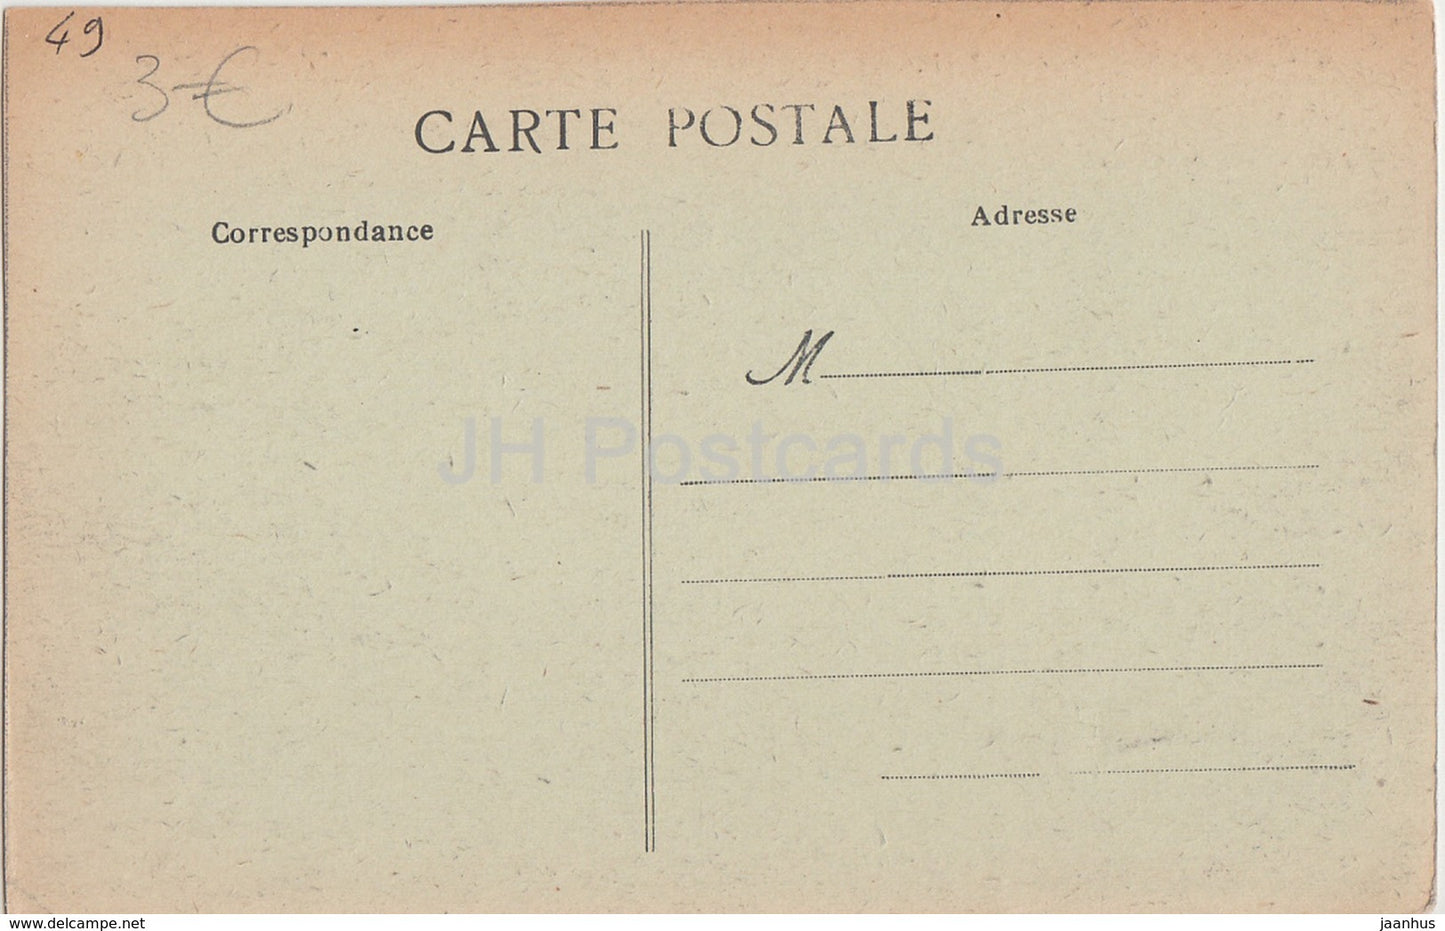 Chateau - Le Plessis Mace - Le Donjon - Chapelle - castle - old postcard - France - unused